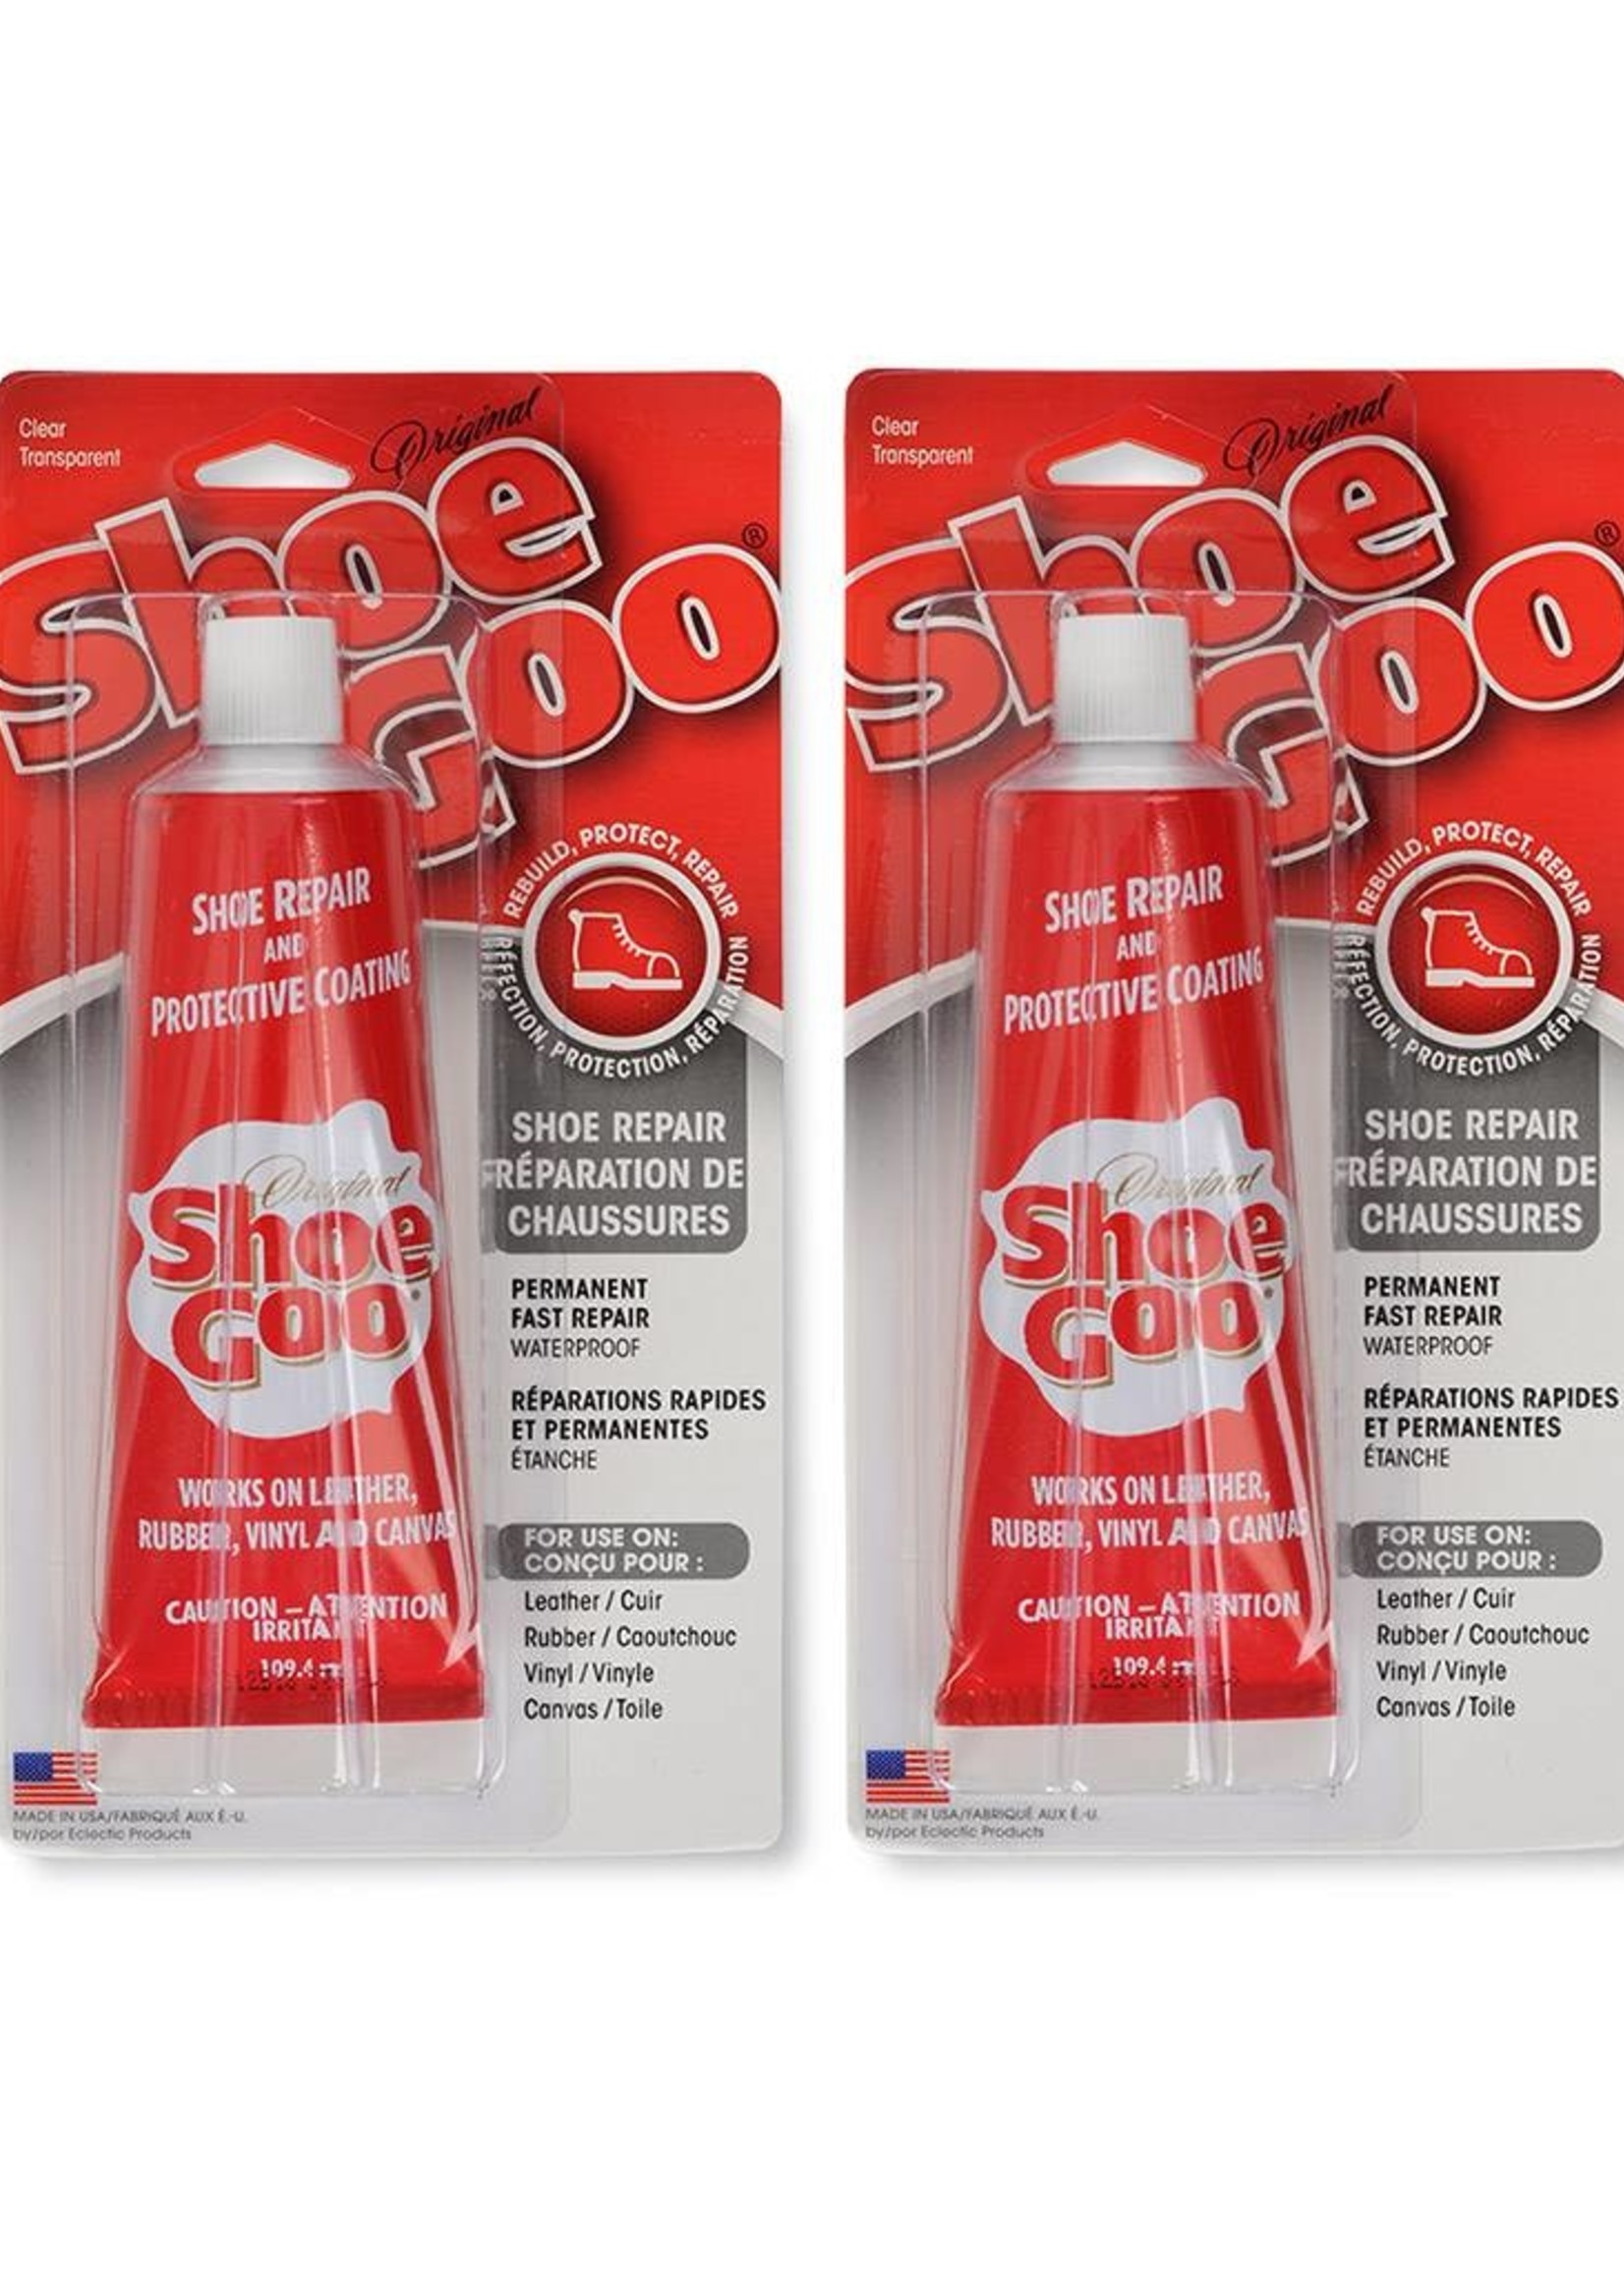 Shoe Goo Shoe Goo 109.4 ml Clear 2-Pack with 10% Discount